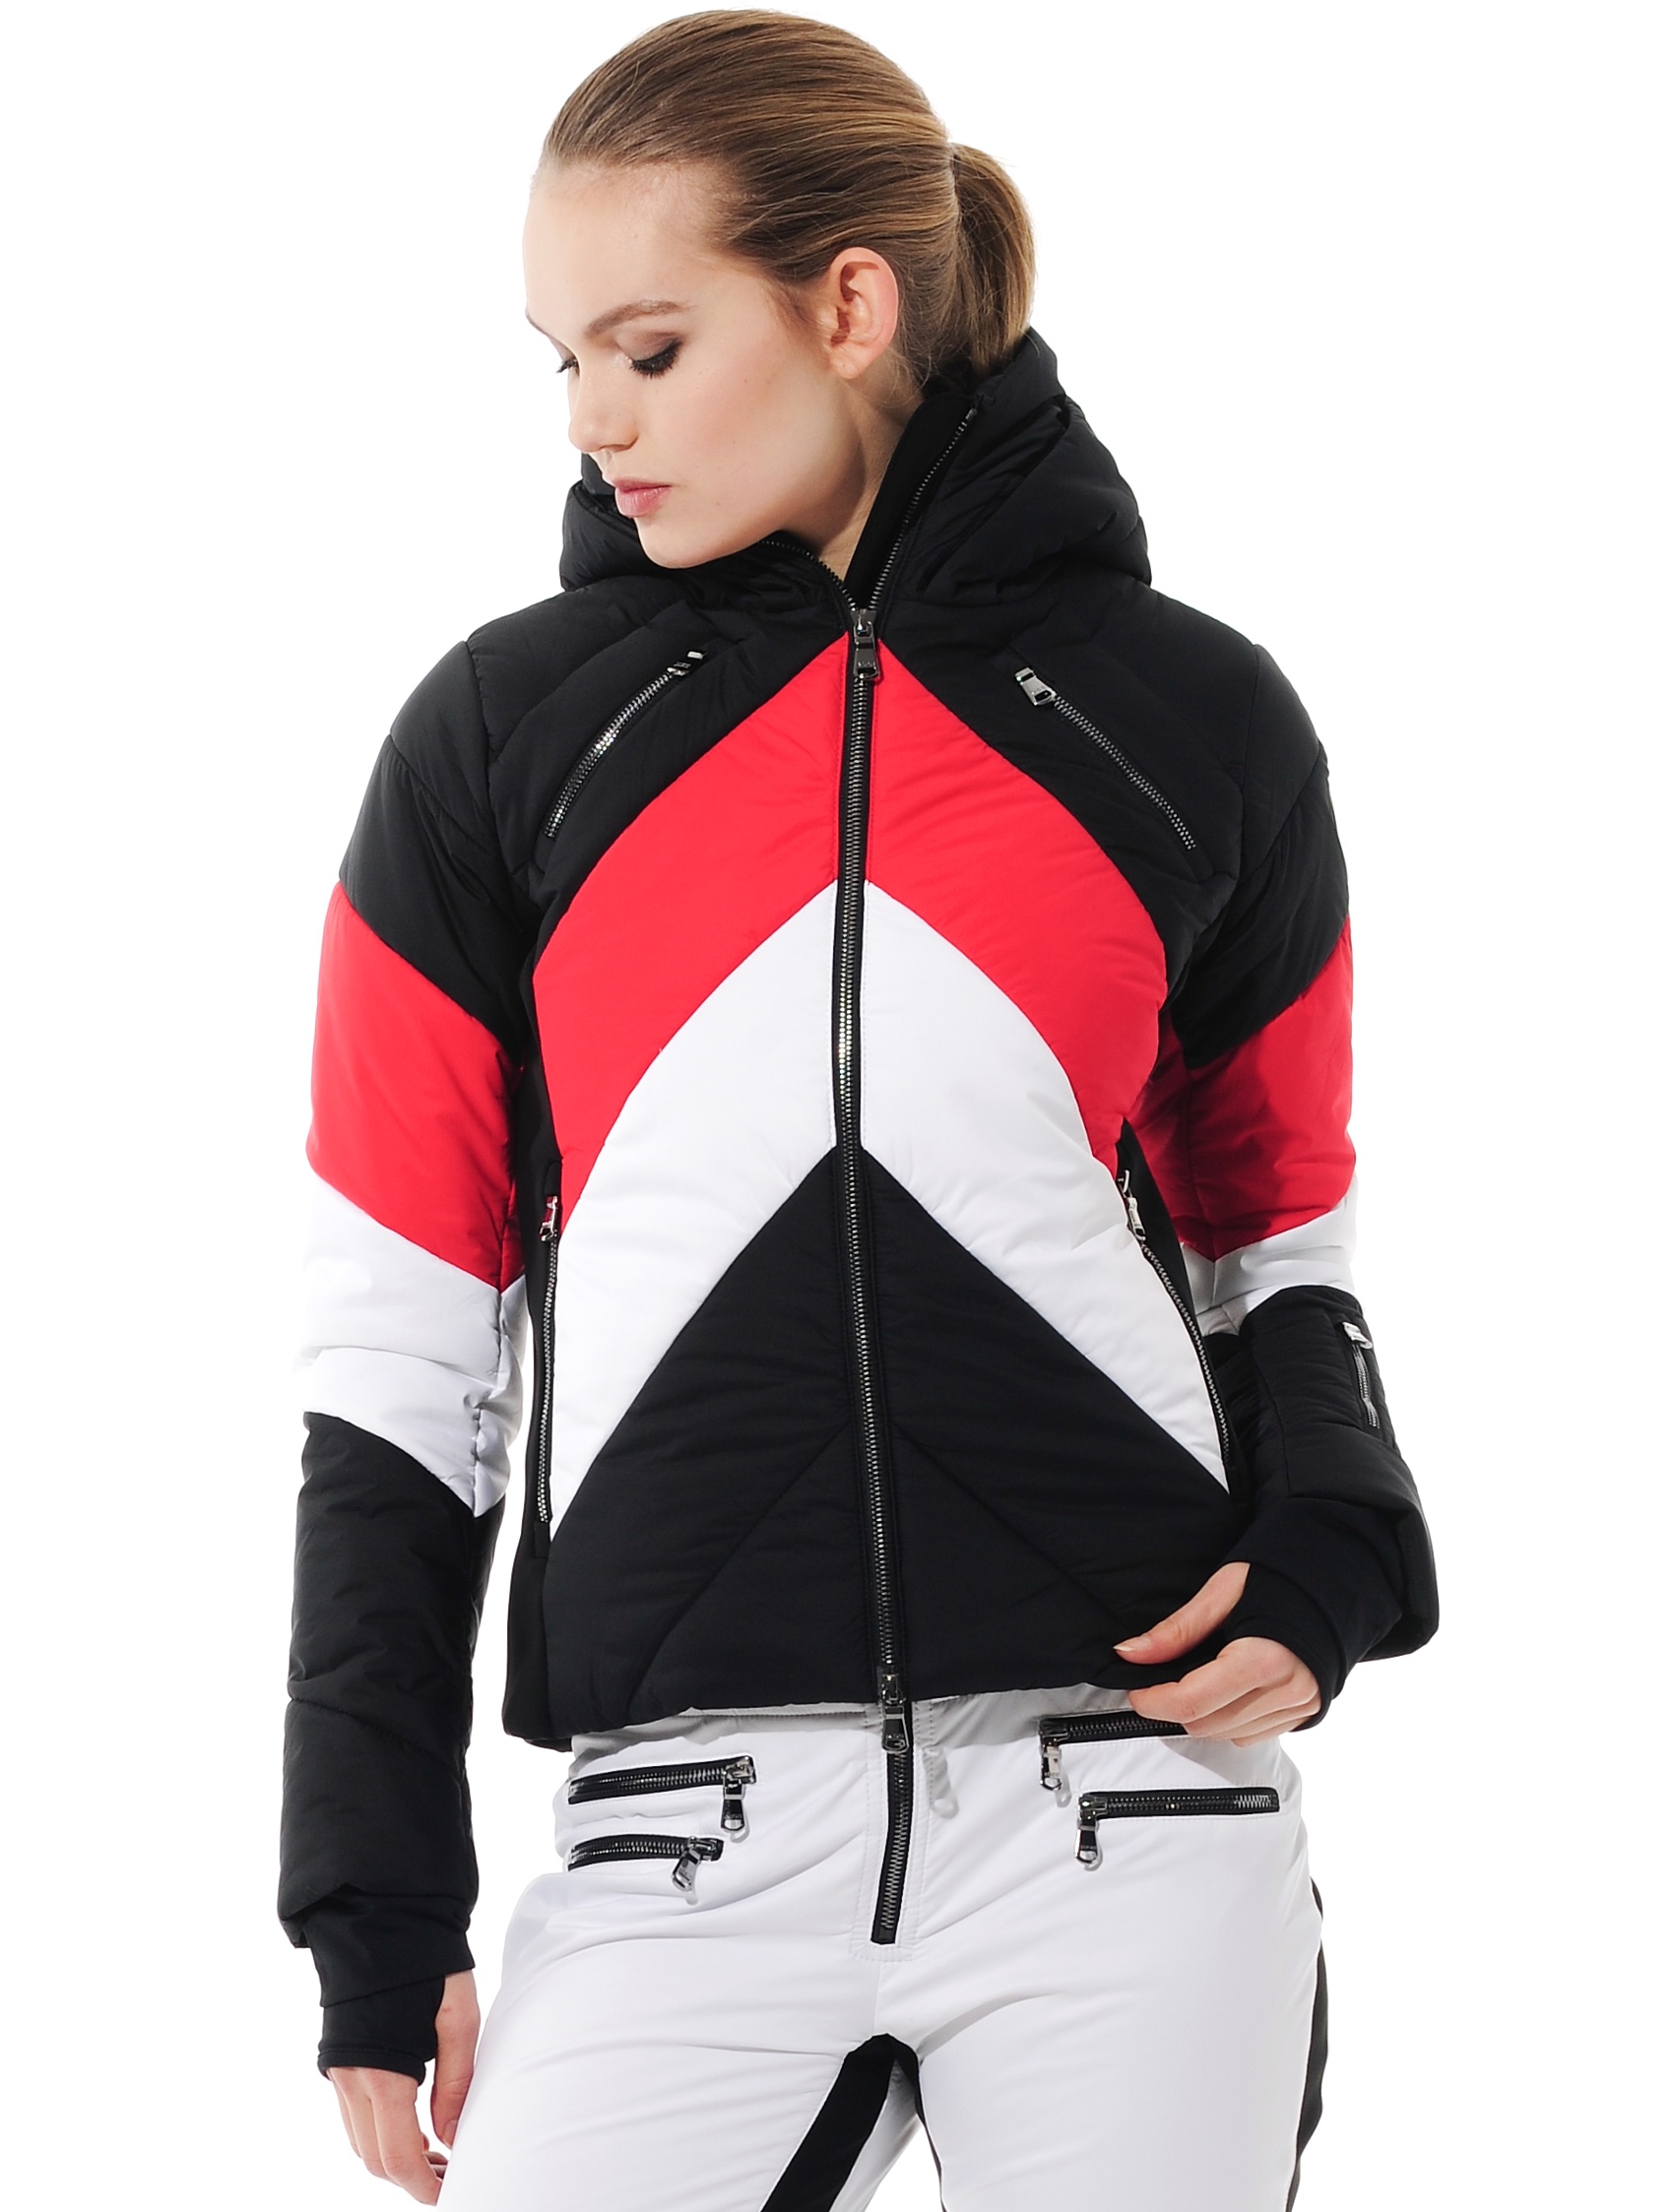 stretch ski jacket with 4way stretch side panels black/red 